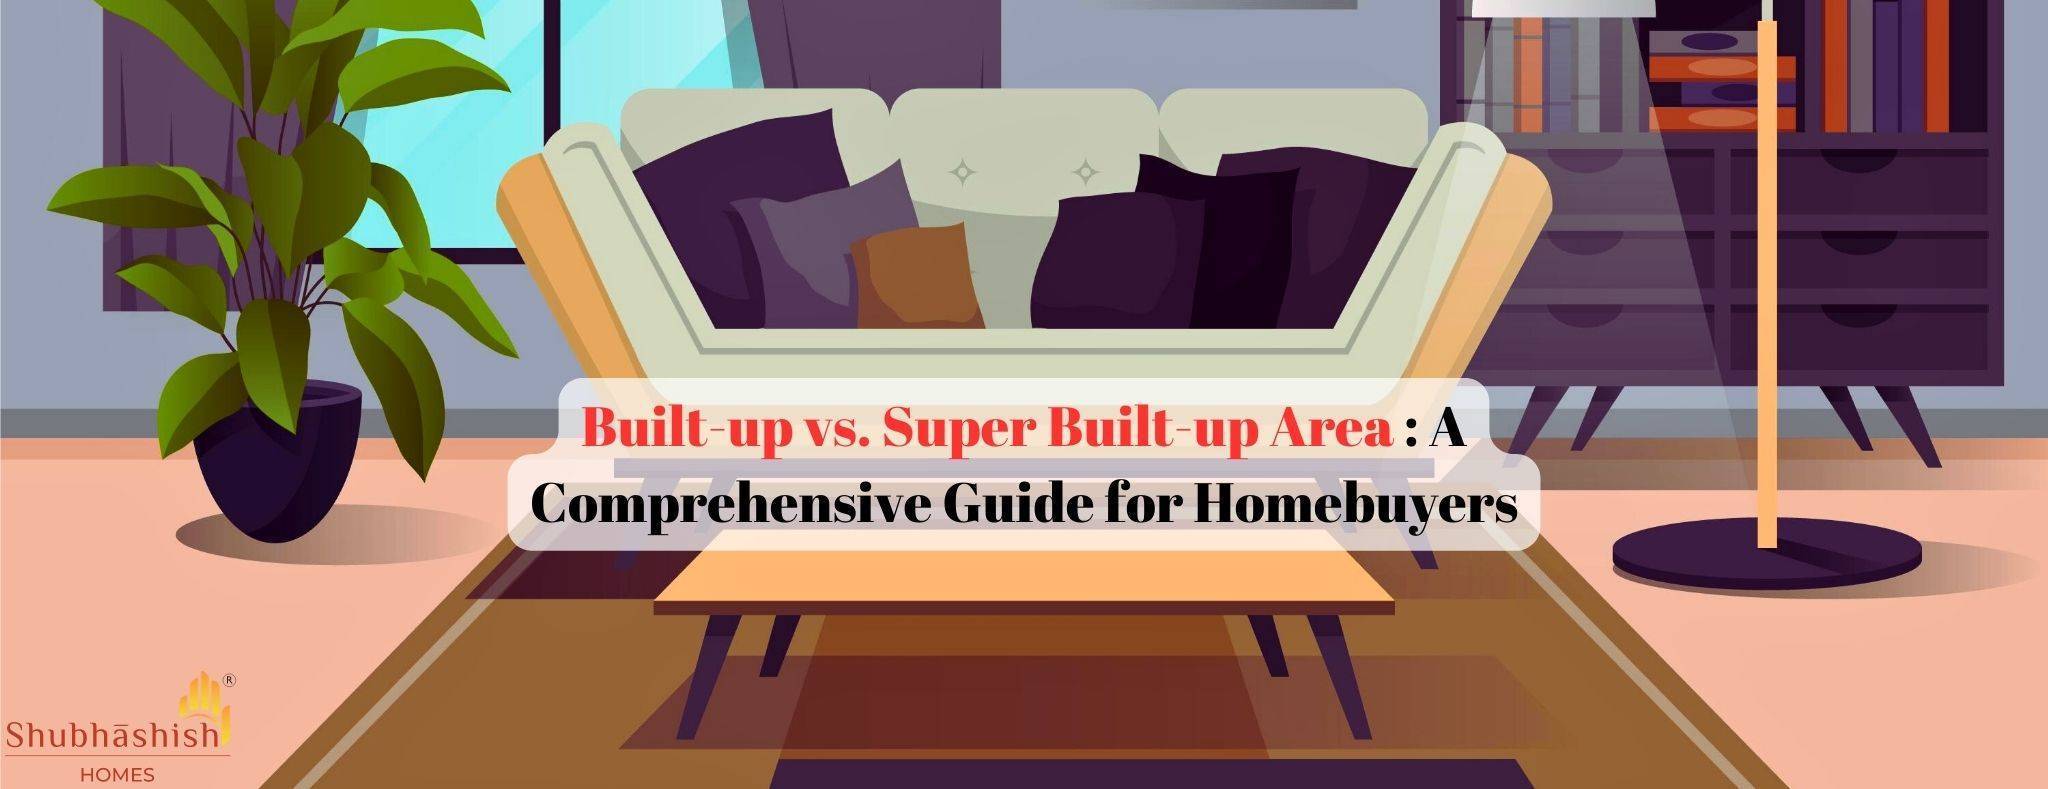 Built-up vs. Super Built-up Area: A Comprehensive Guide for Homebuyers